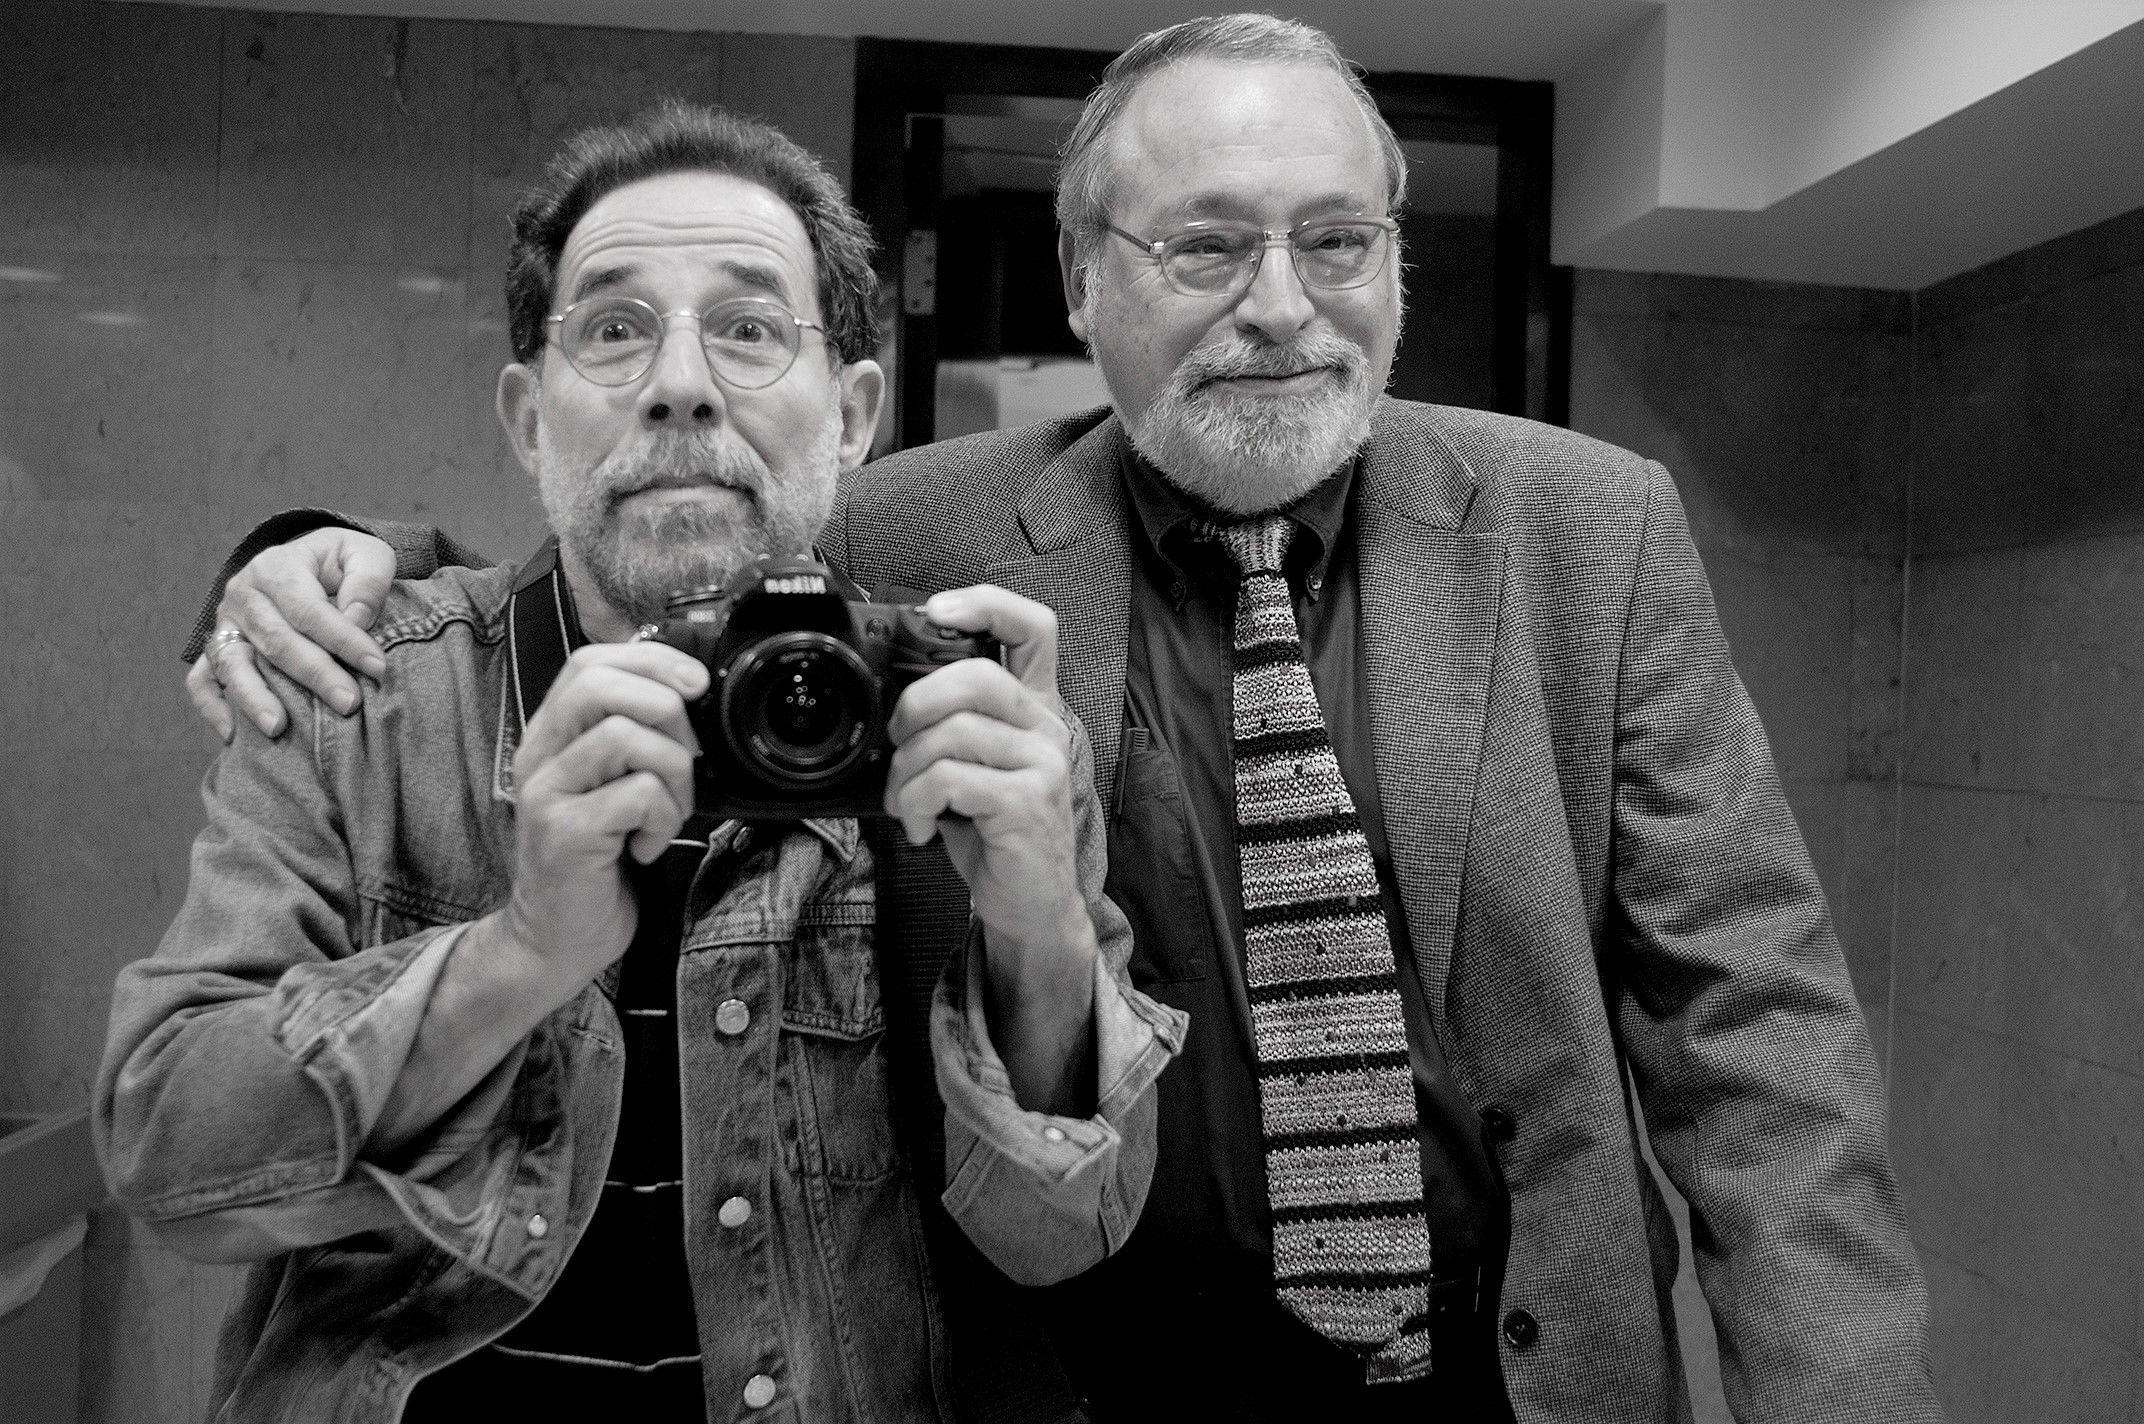 El fotógrafo venezolano Vasco Szinetar con el filósofo español Fernando Savater, en 2014. CORTESÍA